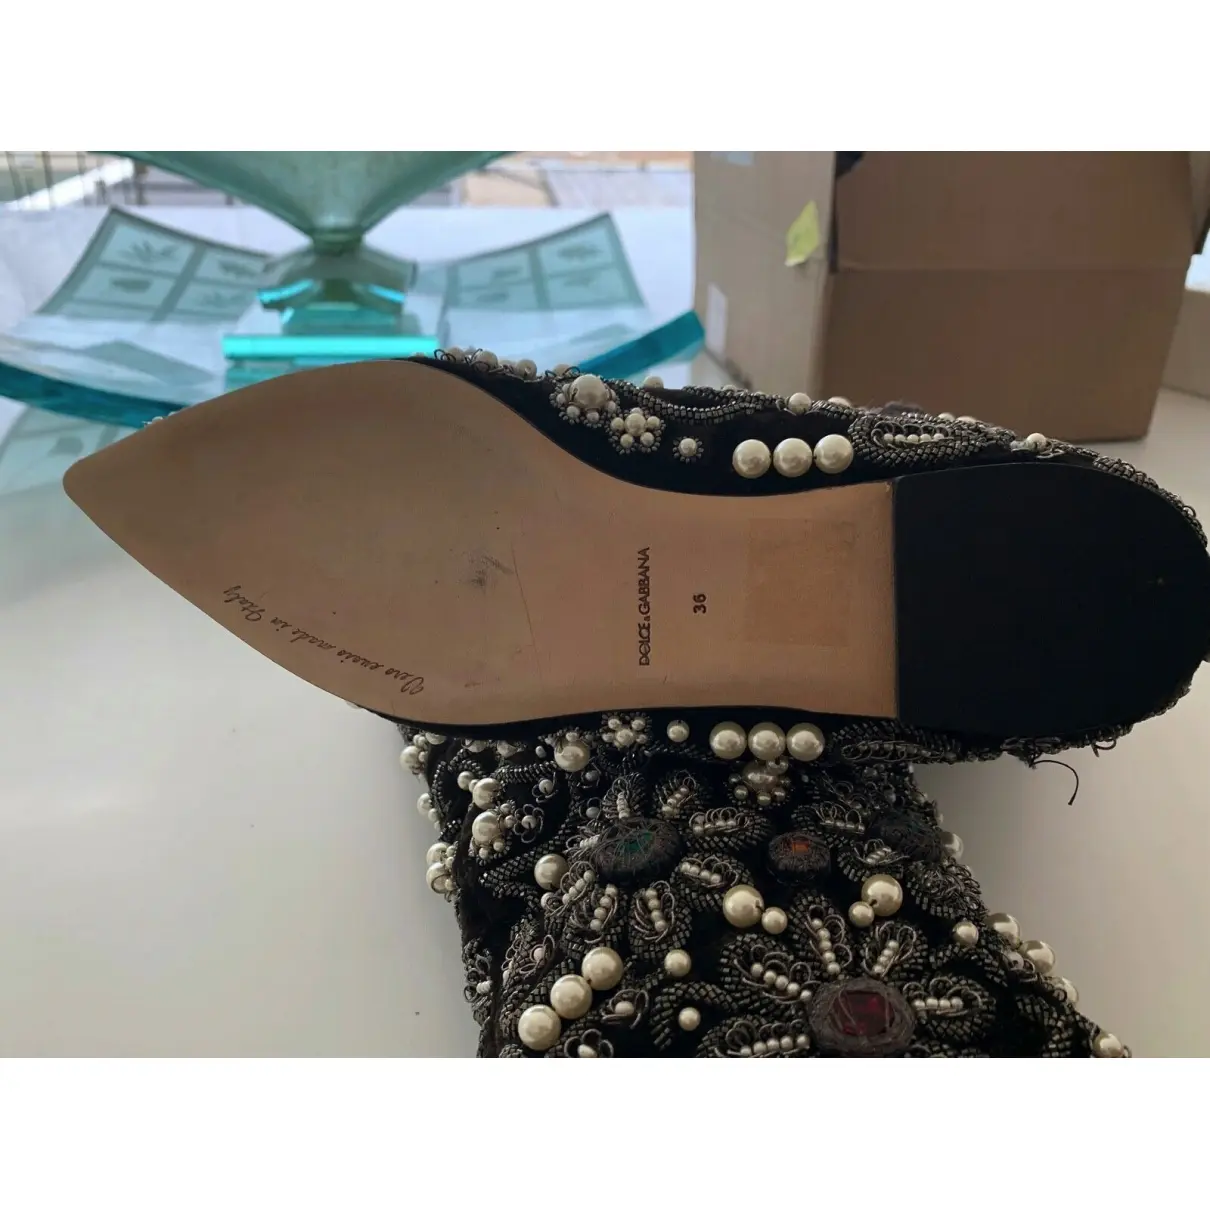 Luxury Dolce & Gabbana Boots Women